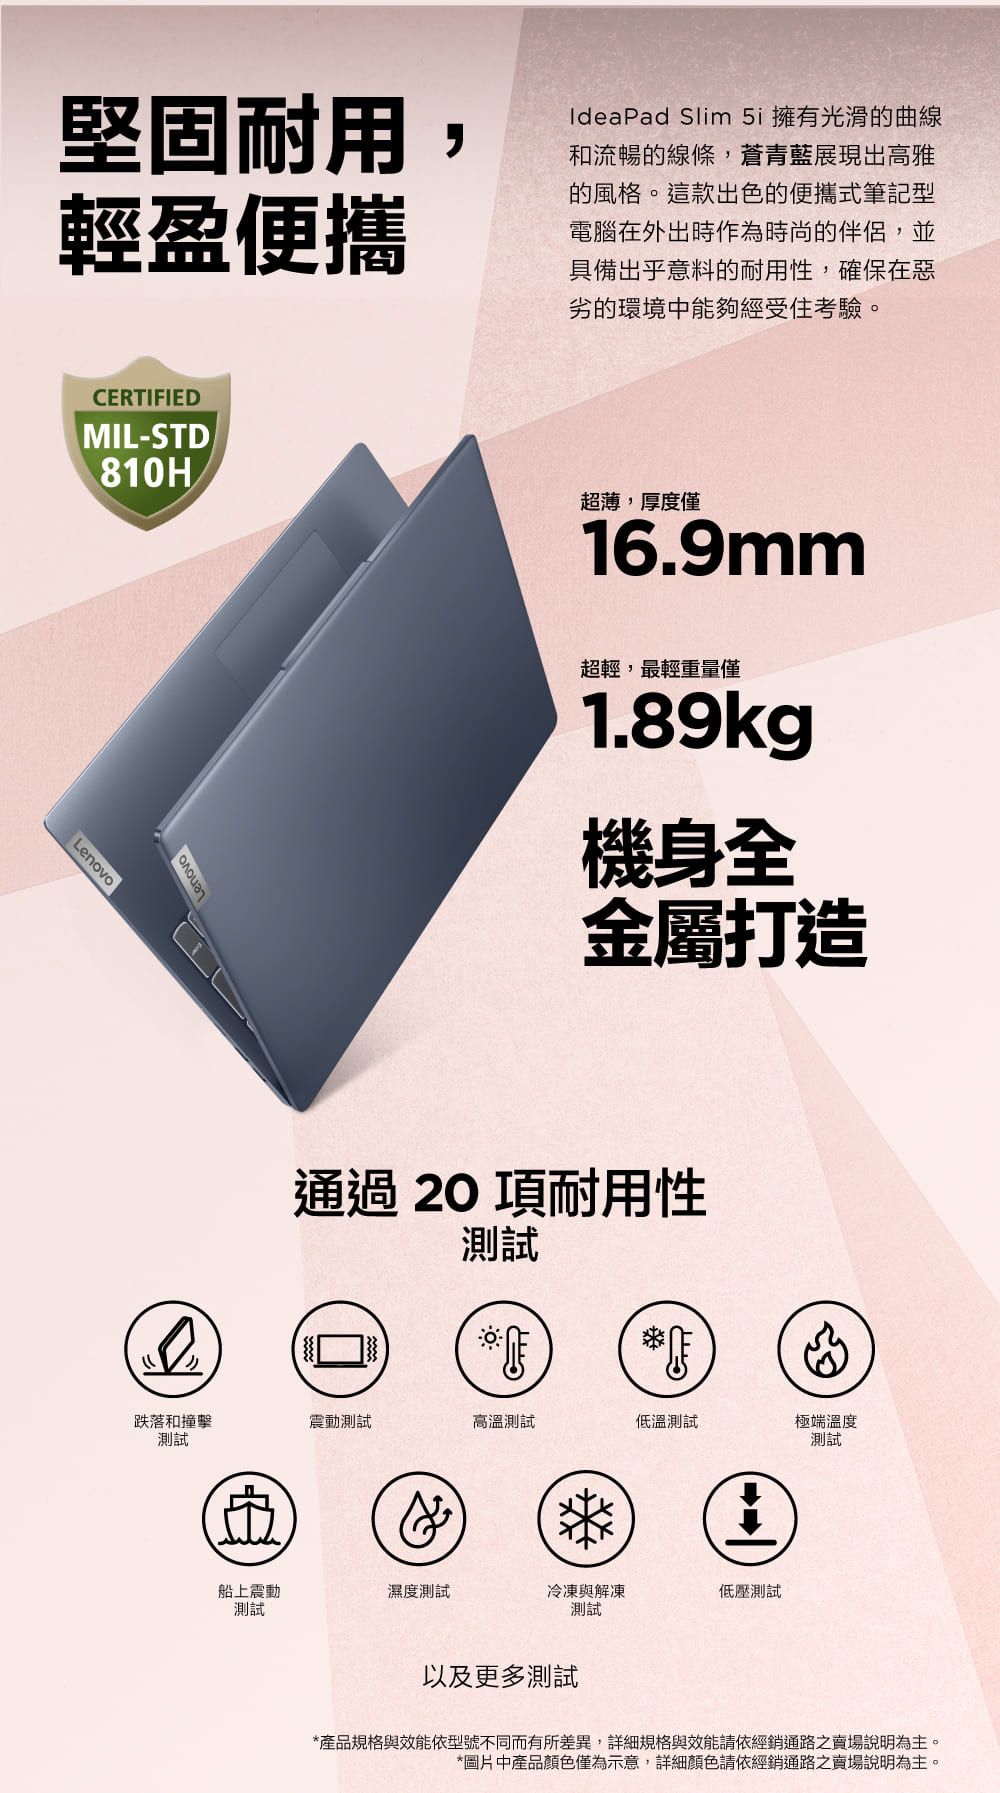 Lenovo堅固耐用輕盈便攜IdeaPad Slim  擁有光滑的曲線和流暢的線條,蒼青藍展現出高雅的風格。這款出色的便攜式筆記型電腦在外出時作為時尚的伴侶,並具備出乎意料的耐用性,確保在惡劣的環境中能夠經受住考驗。CERTIFIEDMIL-STD810H超薄,厚度僅16.9mmLenovo超輕,最輕重量僅1.89kg機身全金屬打造通過 20 項耐用性測試跌落和撞擊震動測試高溫測試低溫測試測試極端溫度測試榮船上震動濕度測試冷凍與解凍低壓測試測試測試以及更多測試*產品規格與效能依型號不同而有所差異,詳細規格與效能請依經銷通路之賣場說明為主。*圖片中產品顏色僅為示意,詳細顏色請依經銷通路之賣場說明為主。